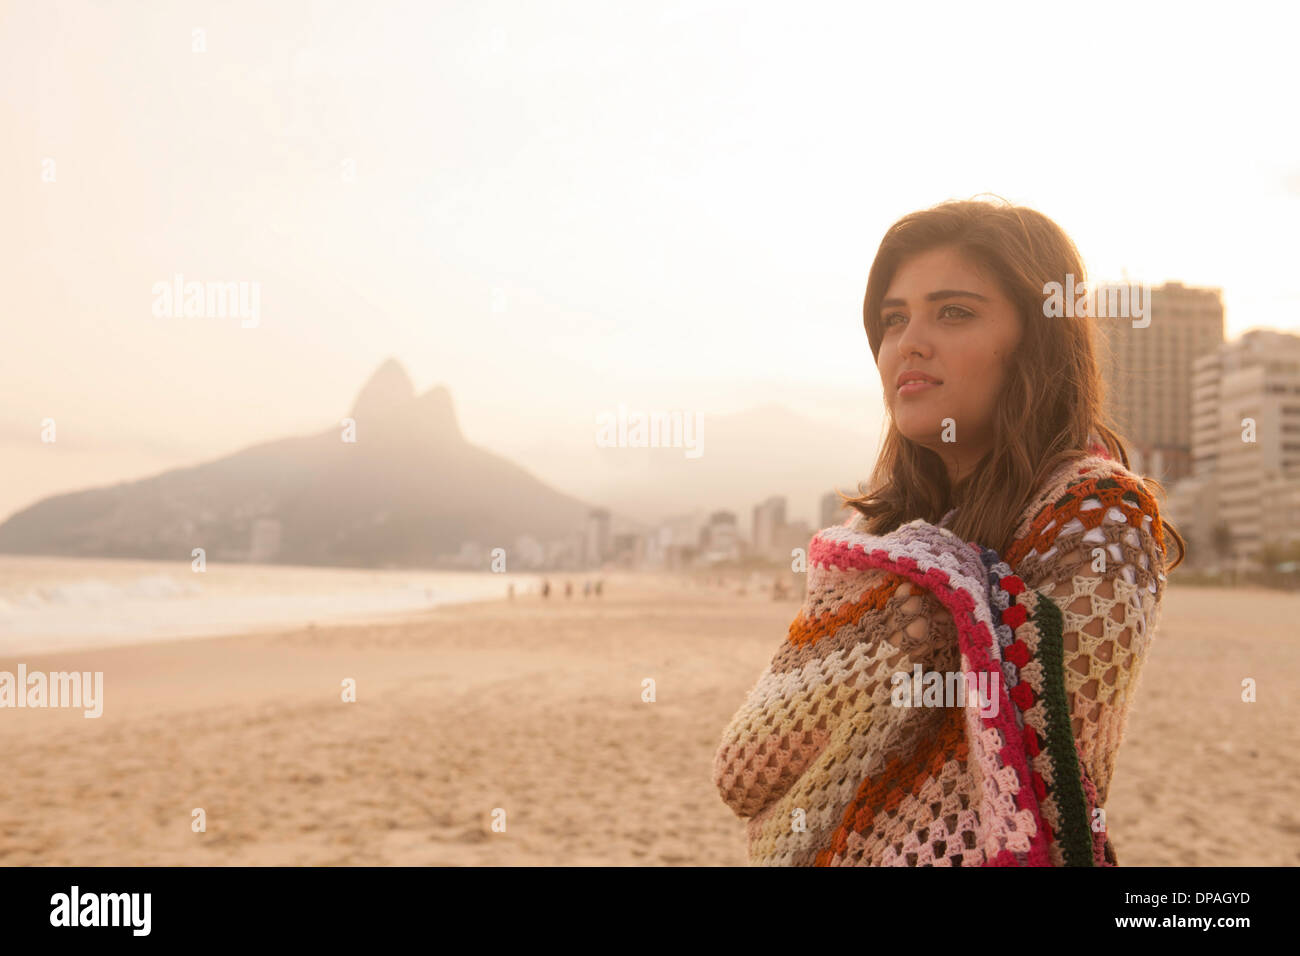 Young woman wrapped in blanket, Ipanema Beach, Rio de Janeiro, Brazil Stock Photo